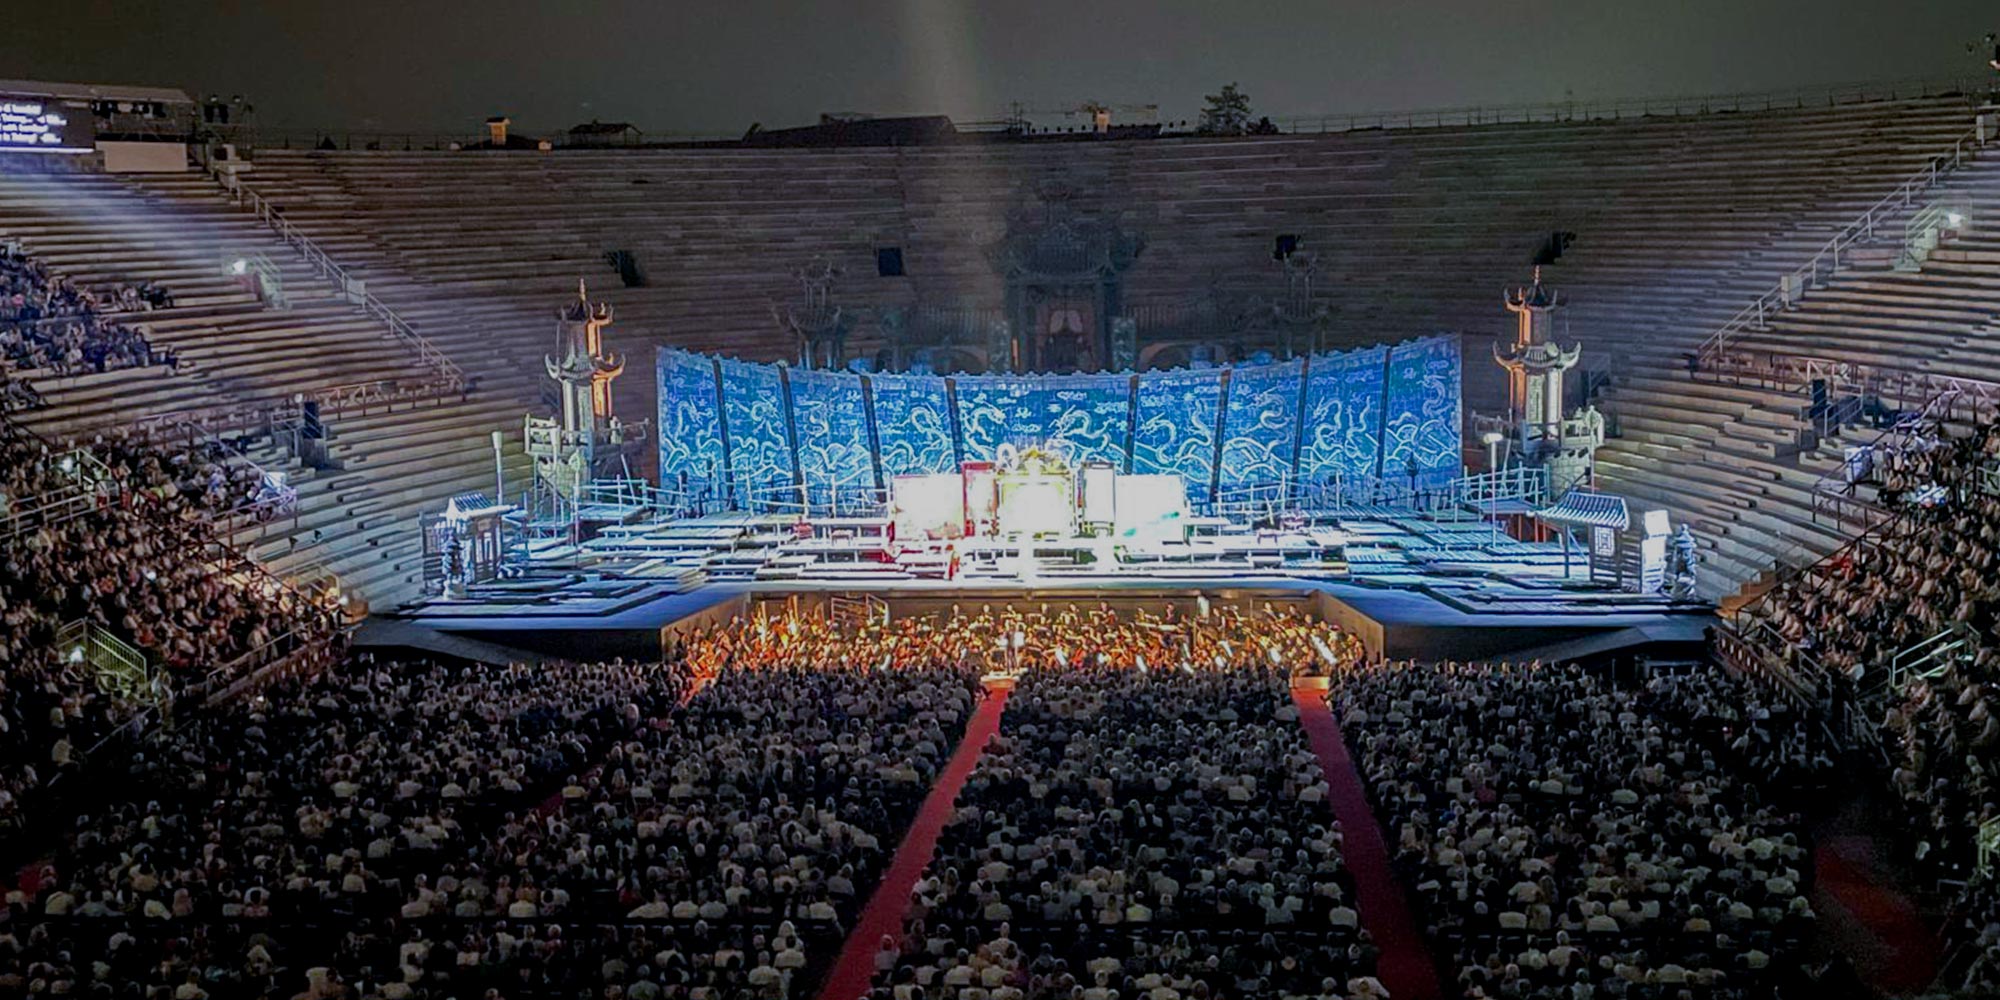 Turandot at the Verona Arena - Oikos